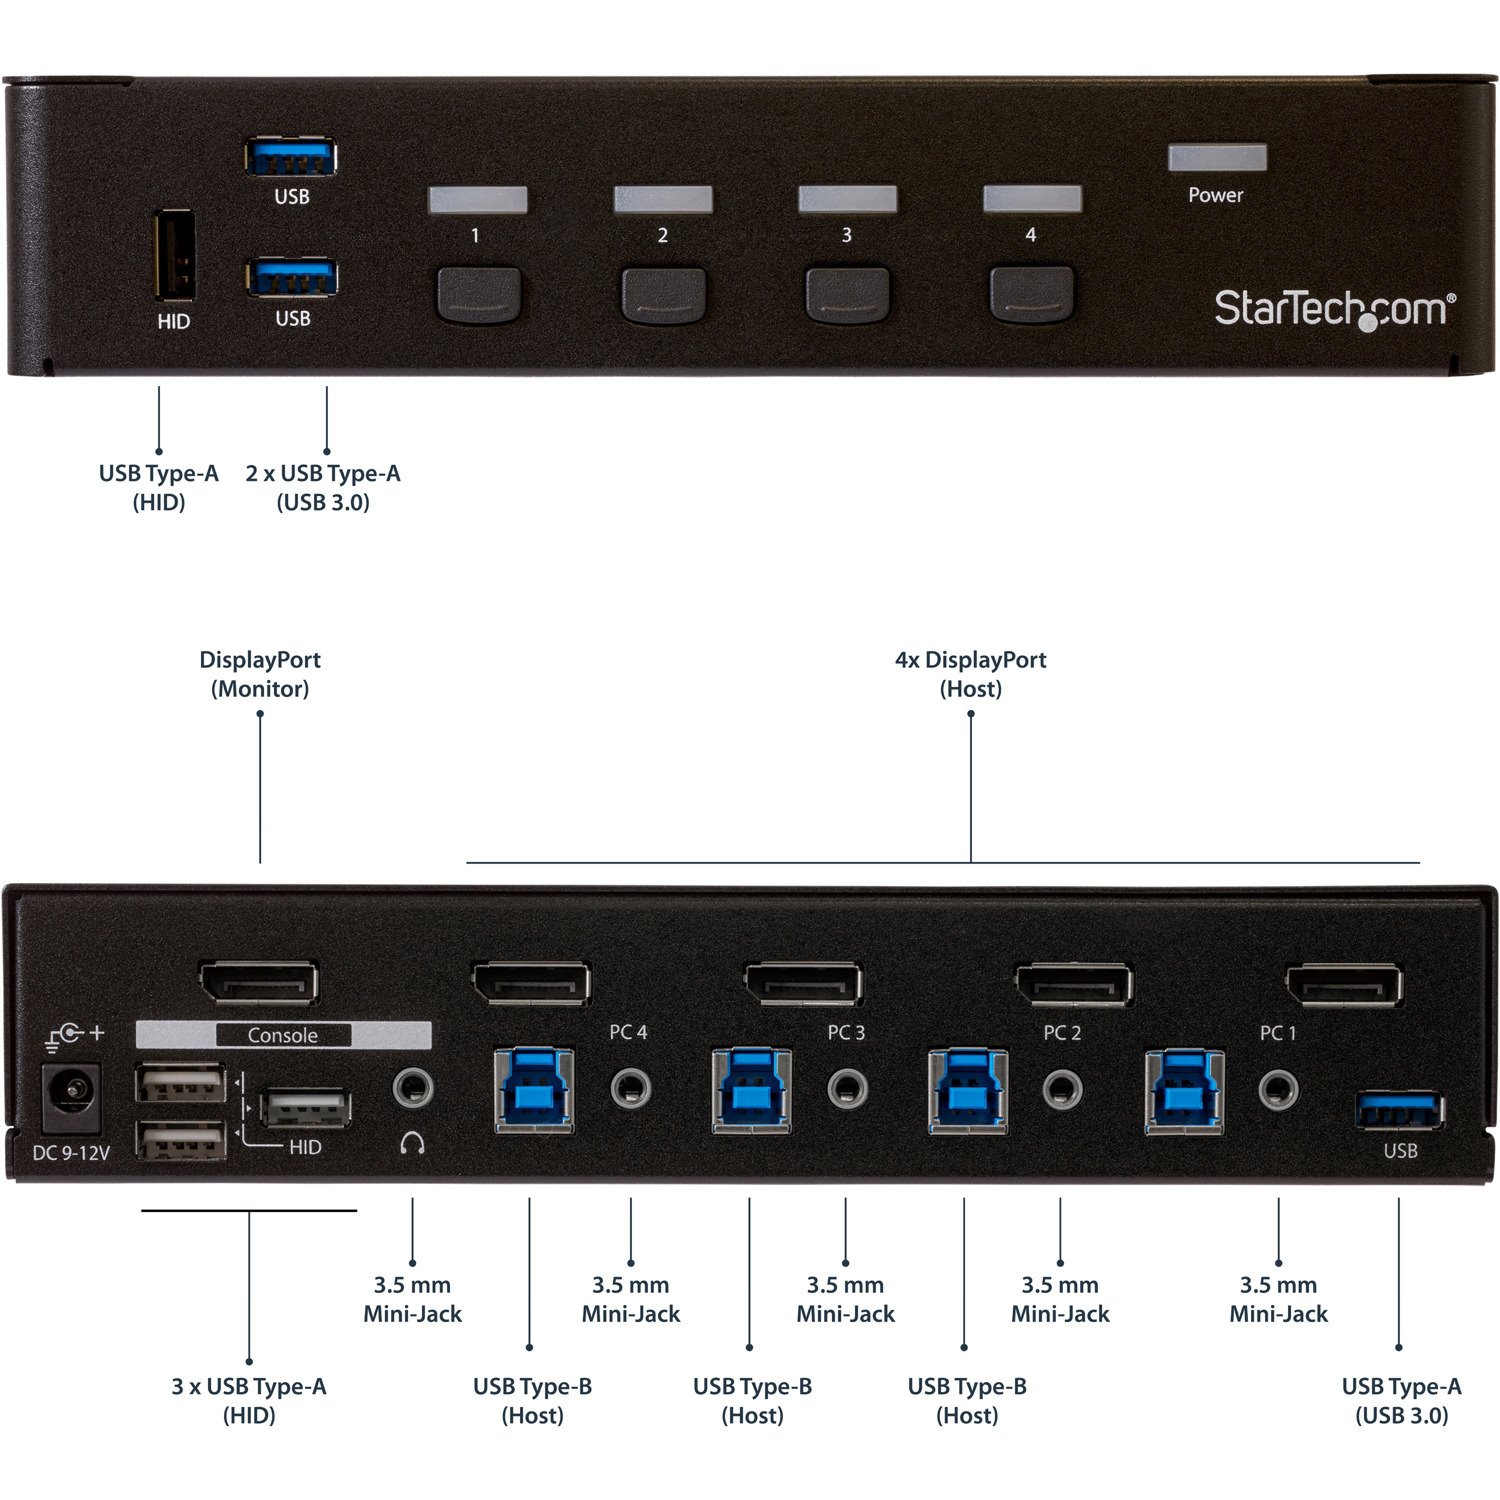 StarTech.com 4-Port DisplayPort KVM Switch - DP KVM Switch with Built-in USB 3.0 Hub for Peripherals - 4K 30 Hz